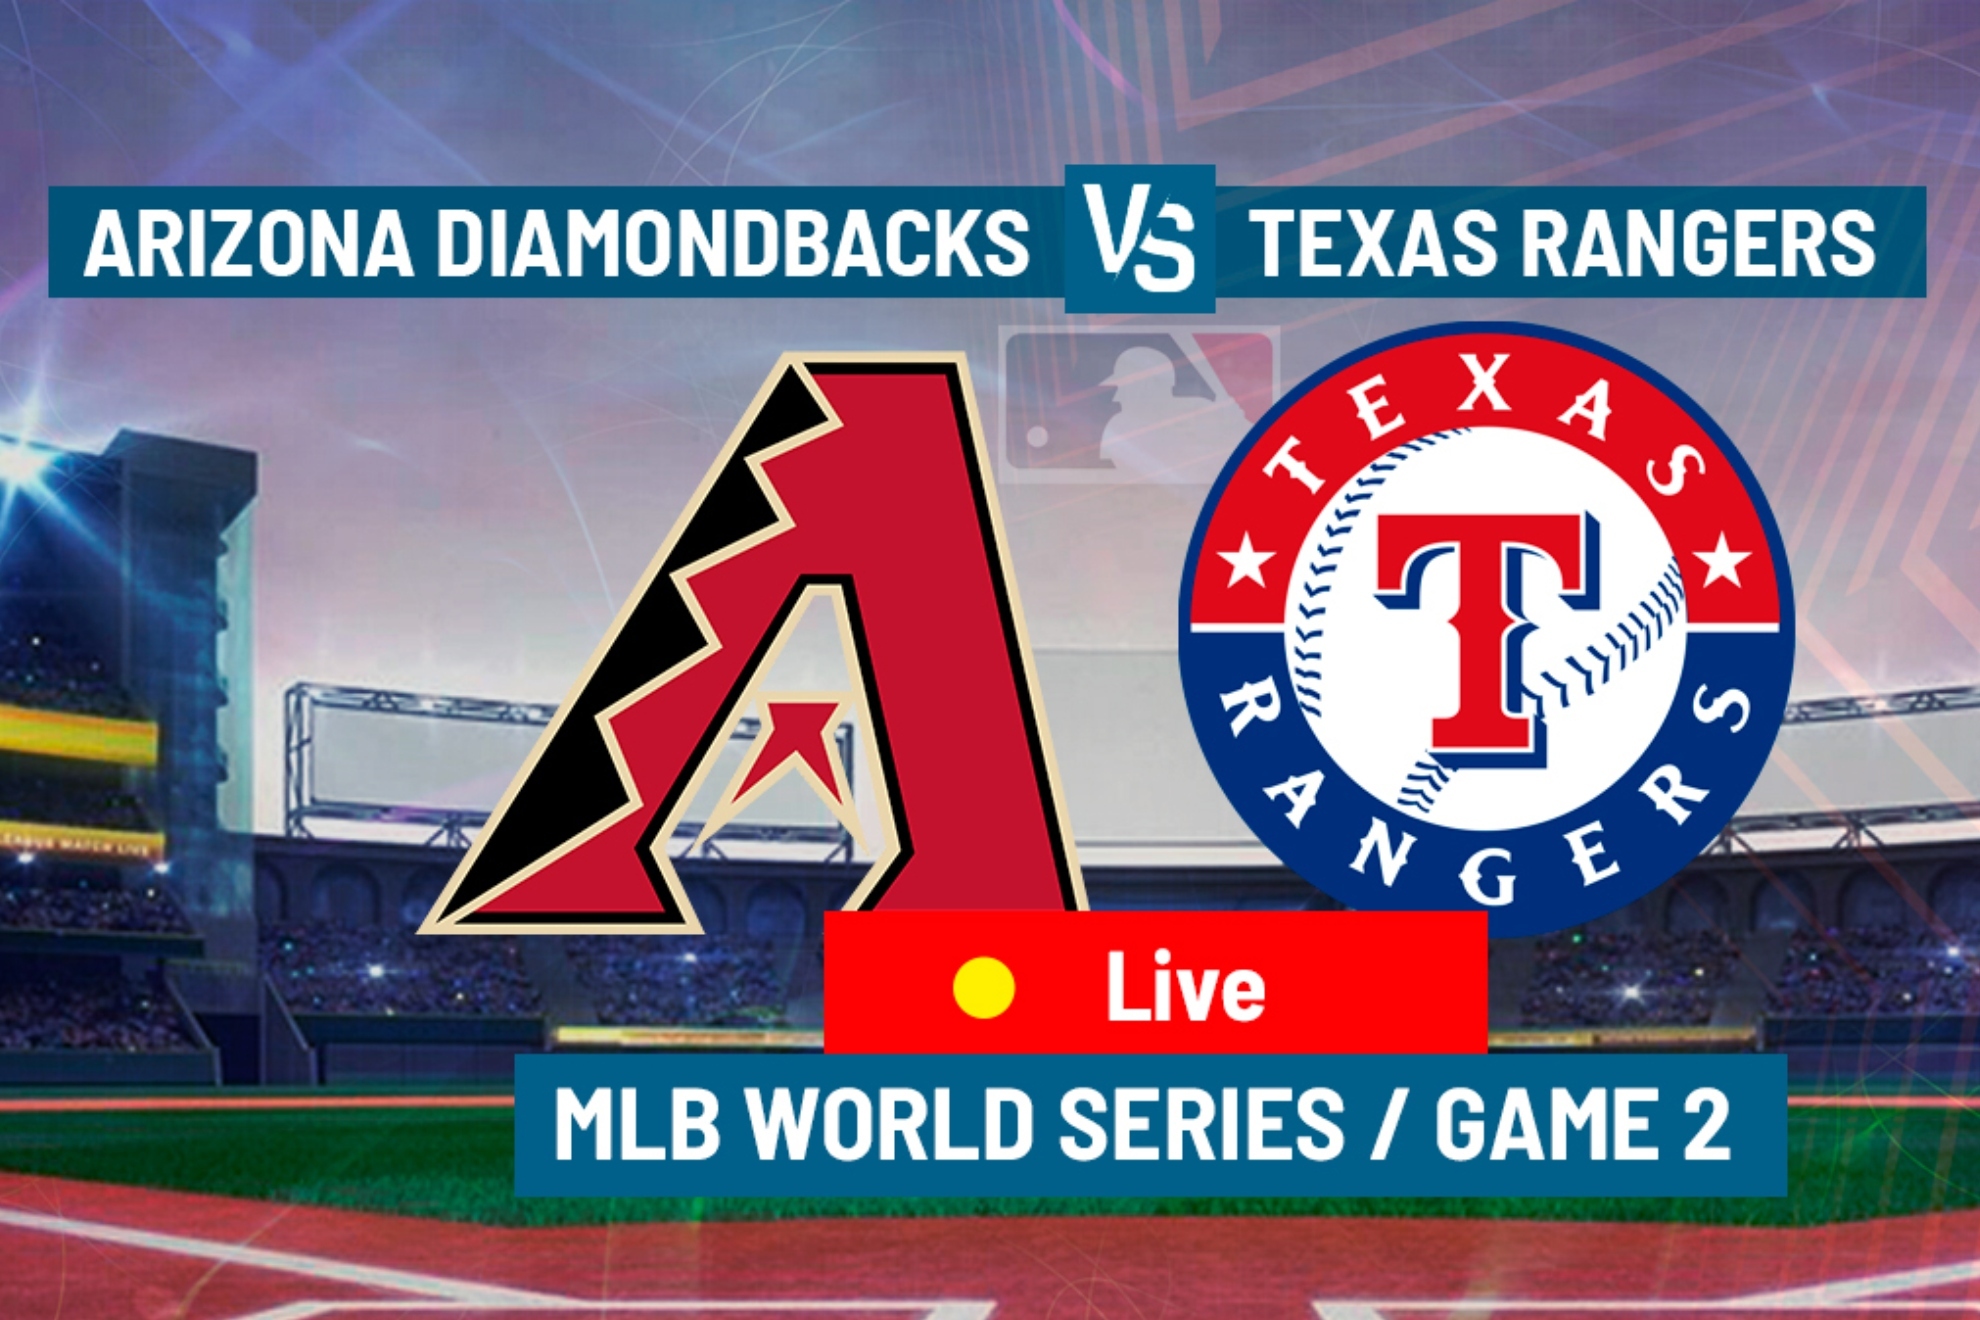 Diamondbacks vs Rangers World Series Game 2